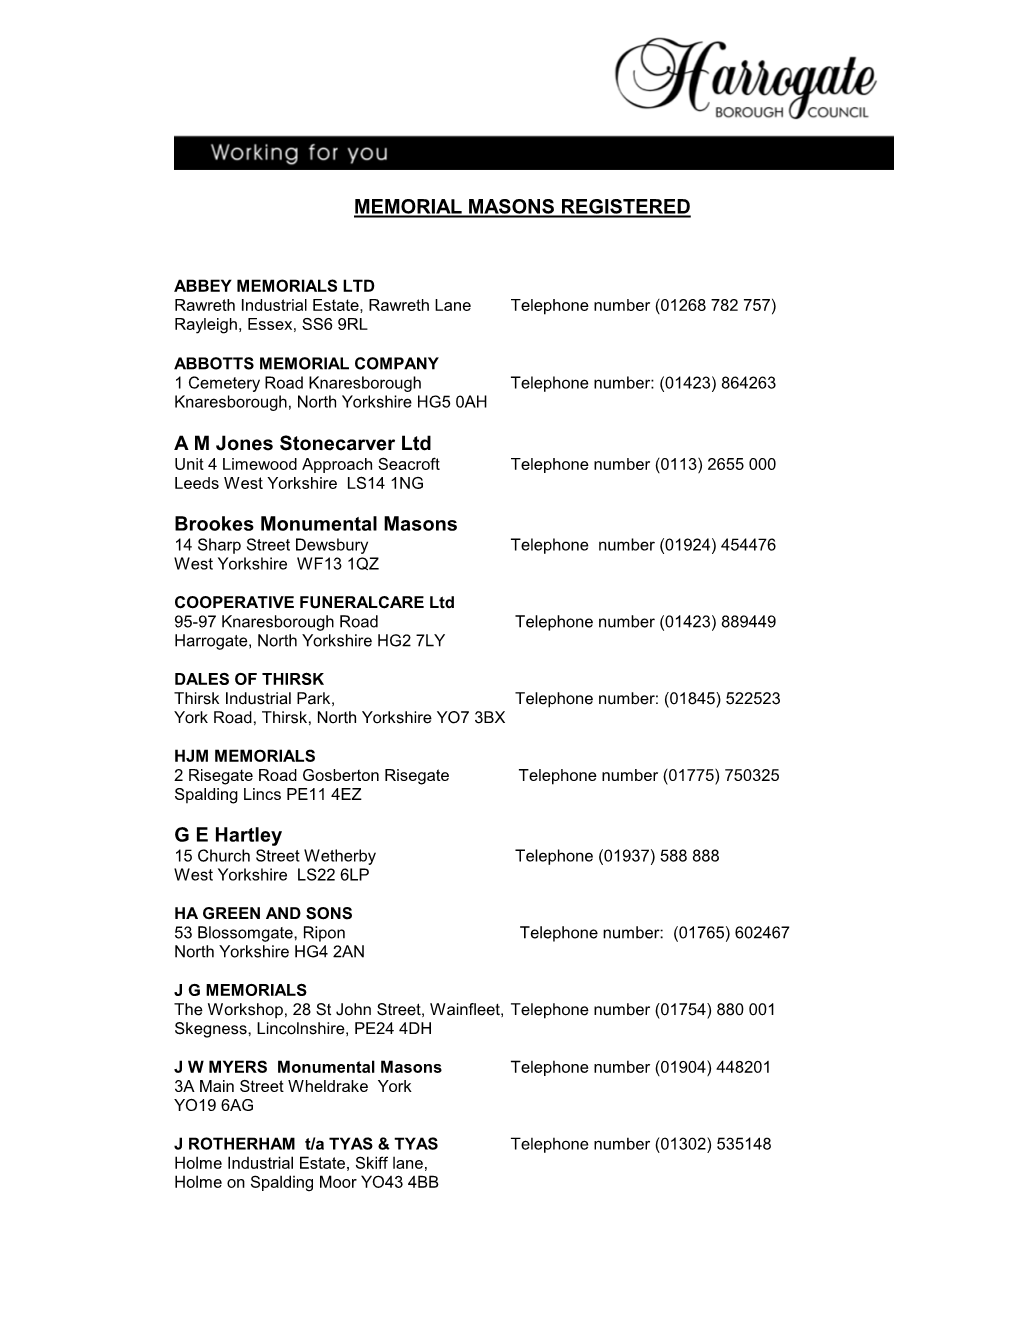 Registered Memorial Masons